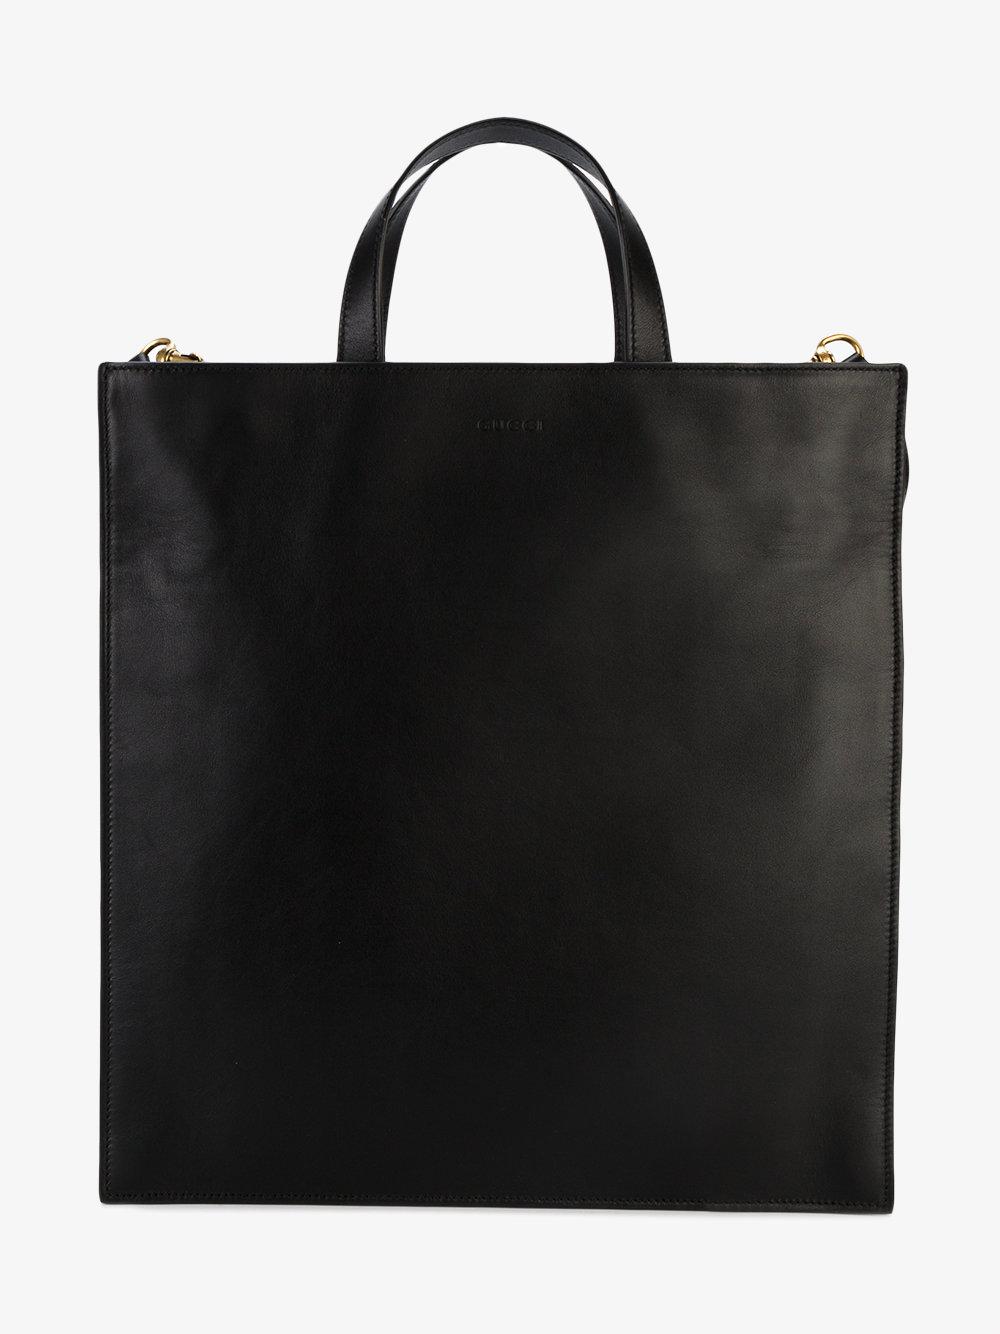 Gucci Snake Embossed Tote Bag in Black for Men - Lyst